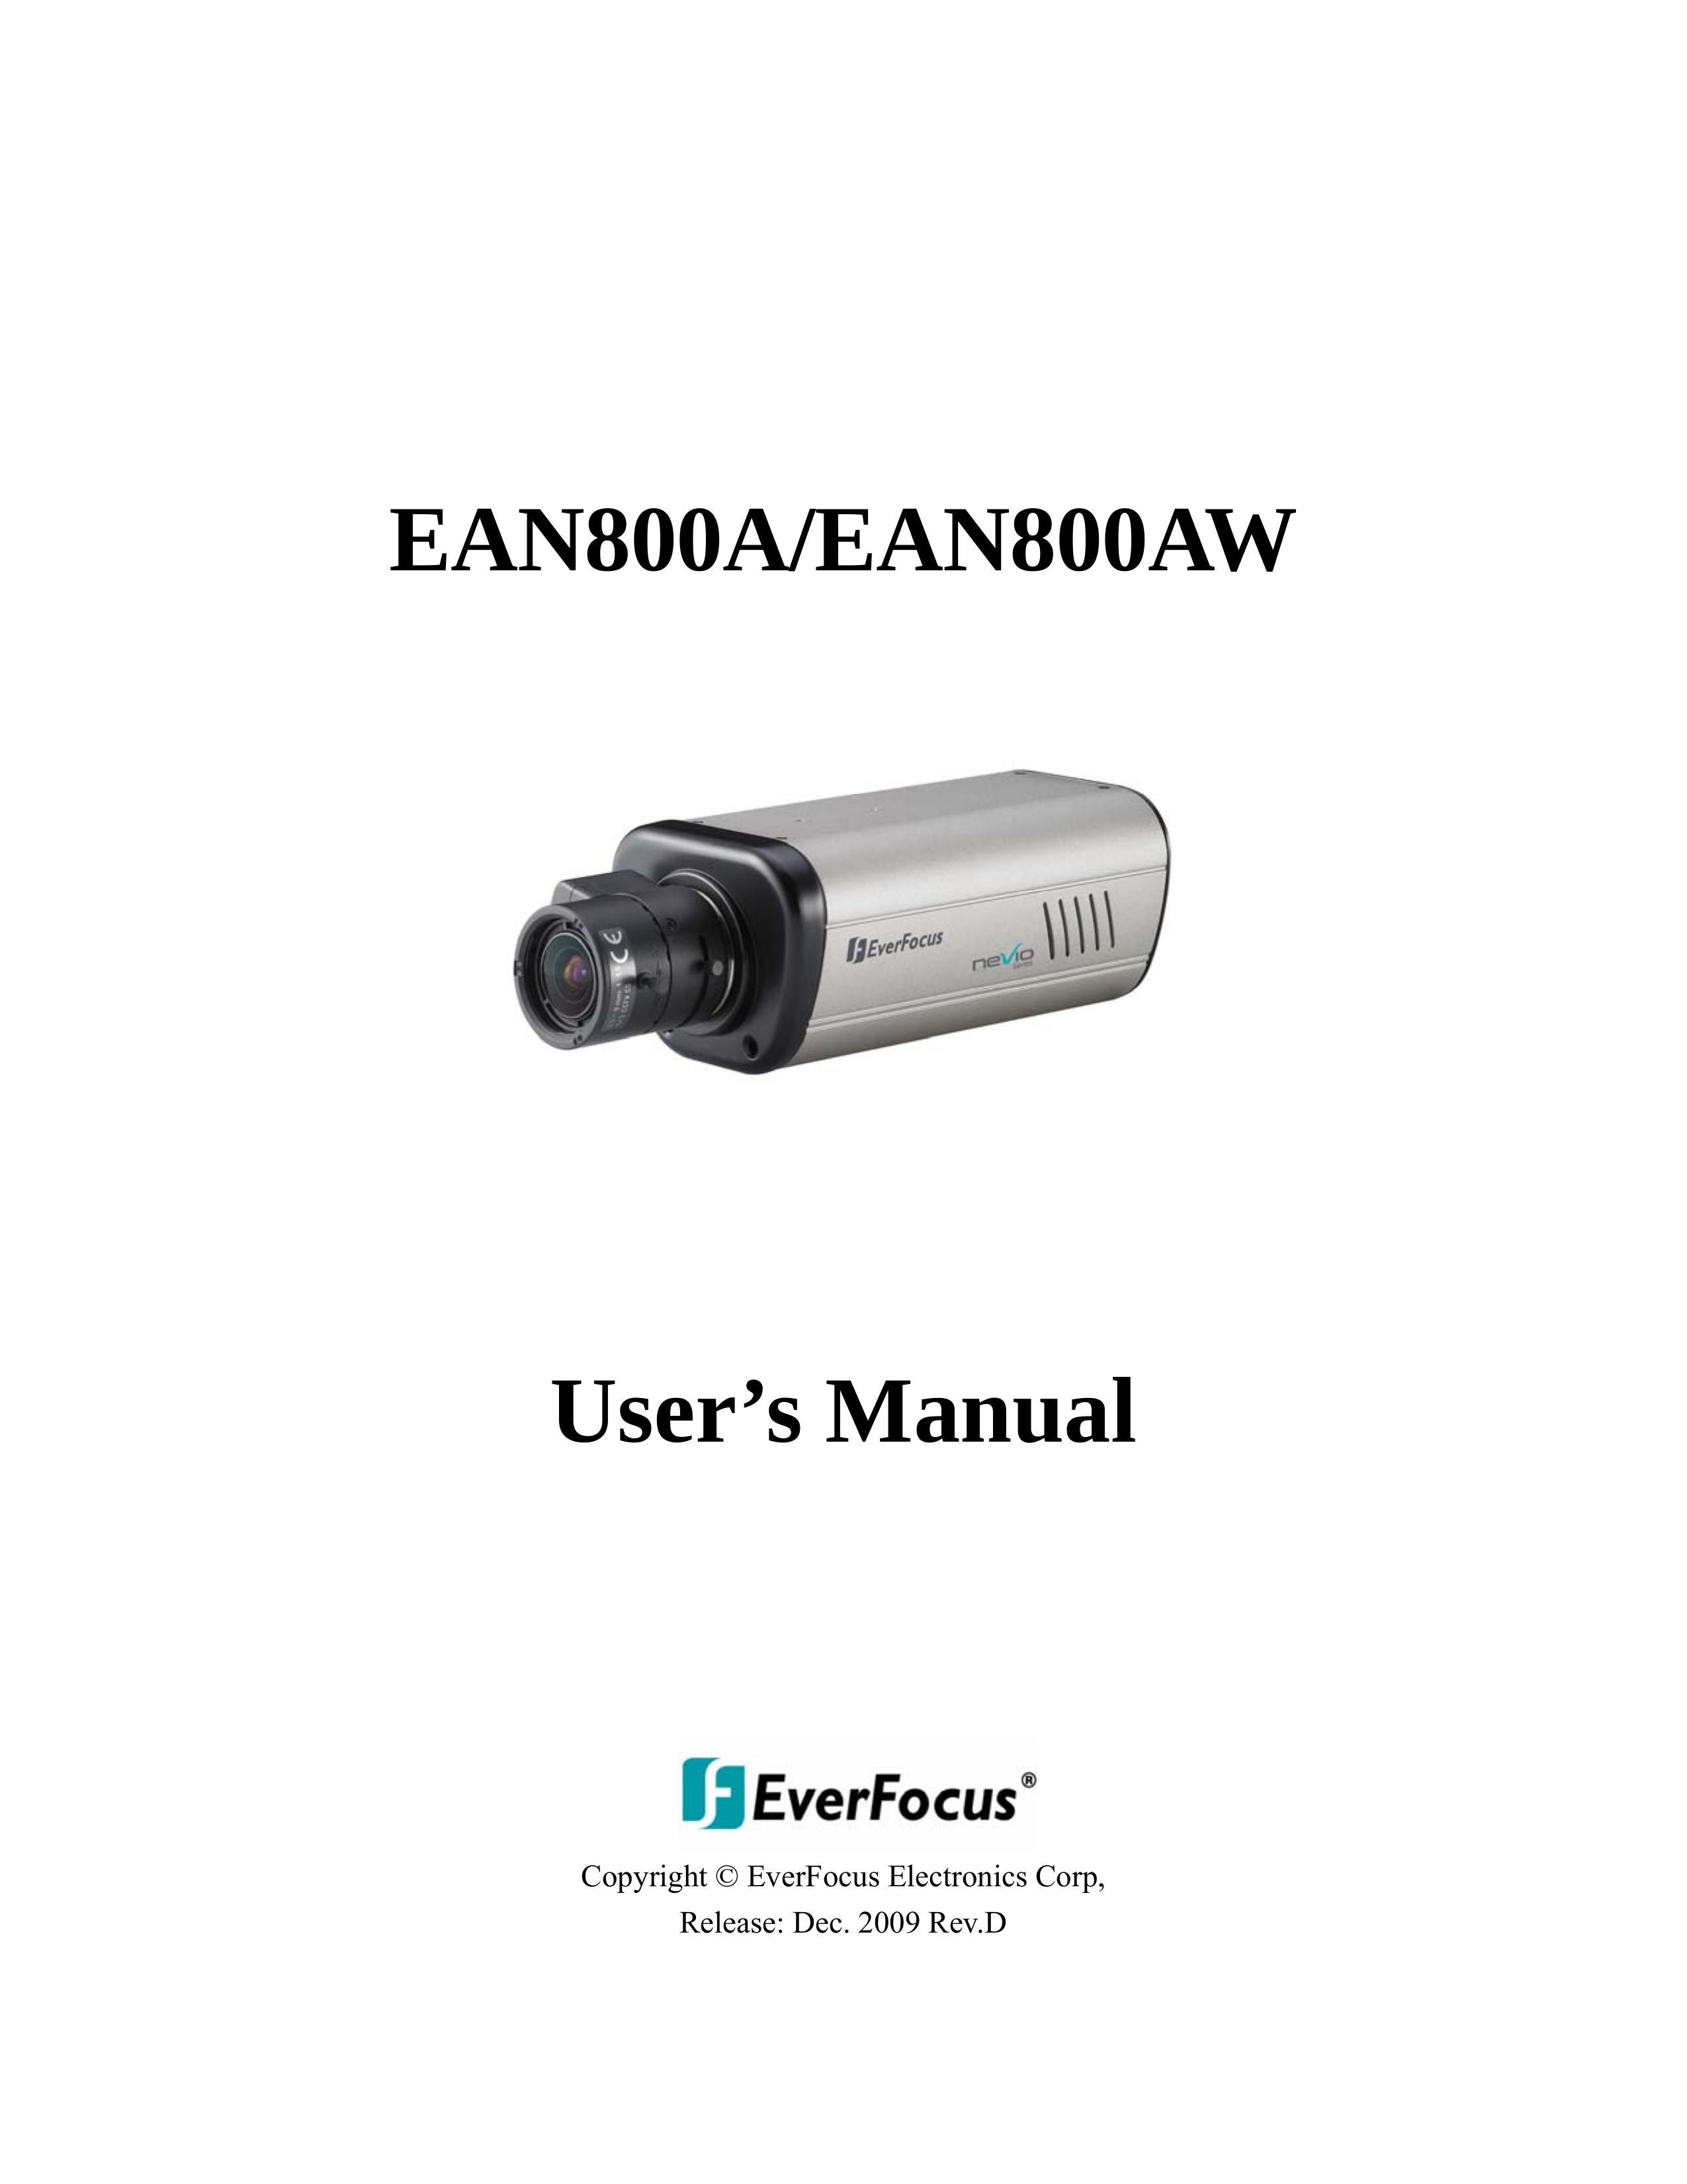 EverFocus EAN800AW Security Camera User Manual